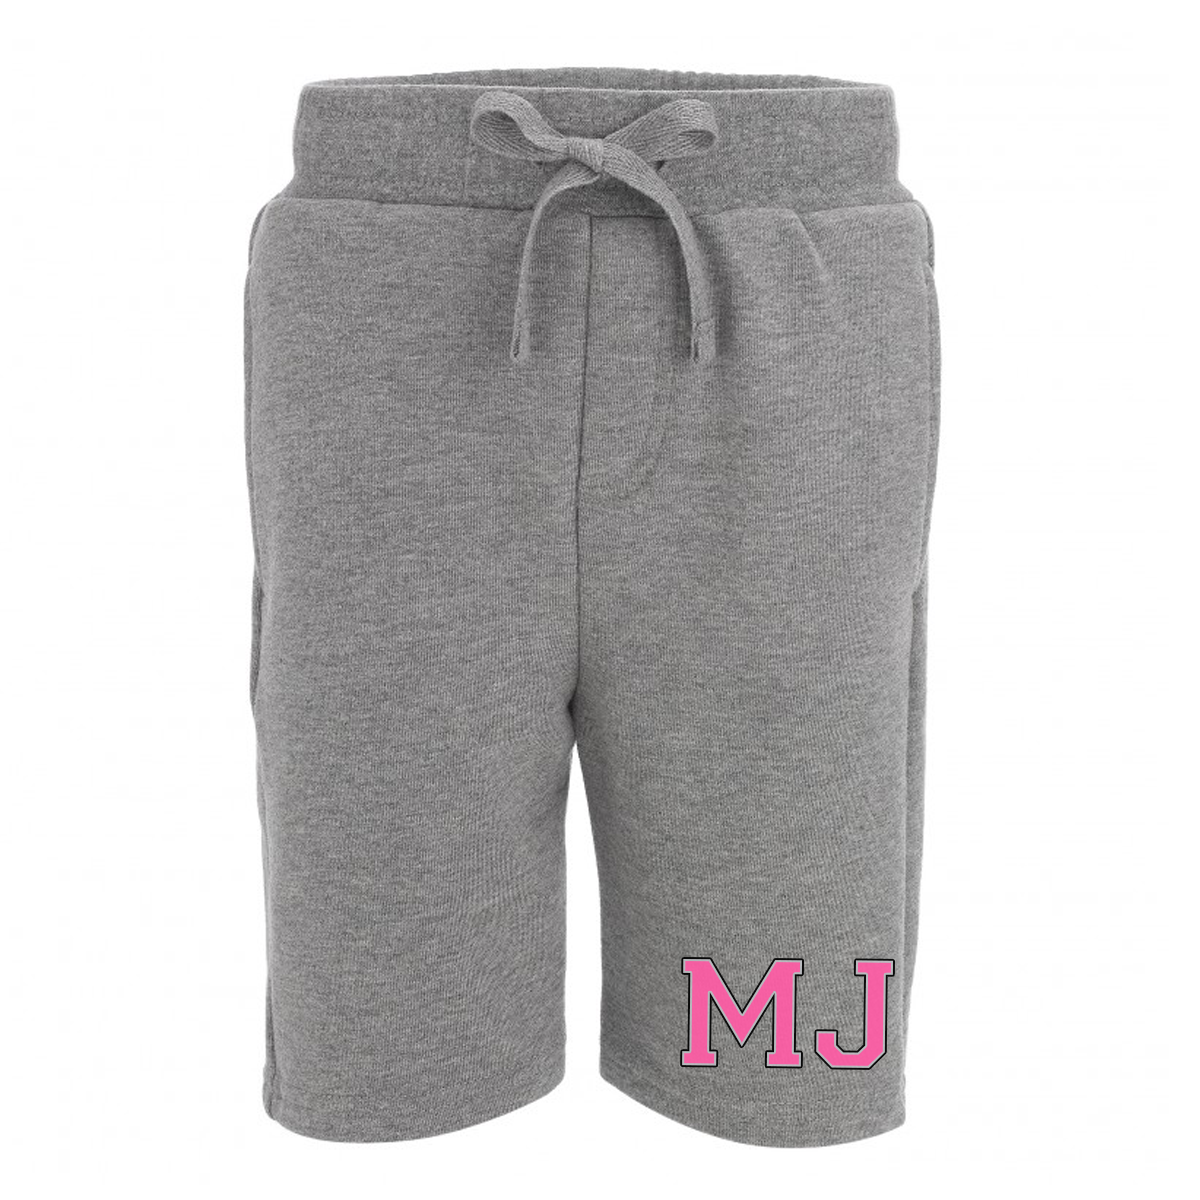 MiniVIP© Personalised Varisty Letters Grey Shorts